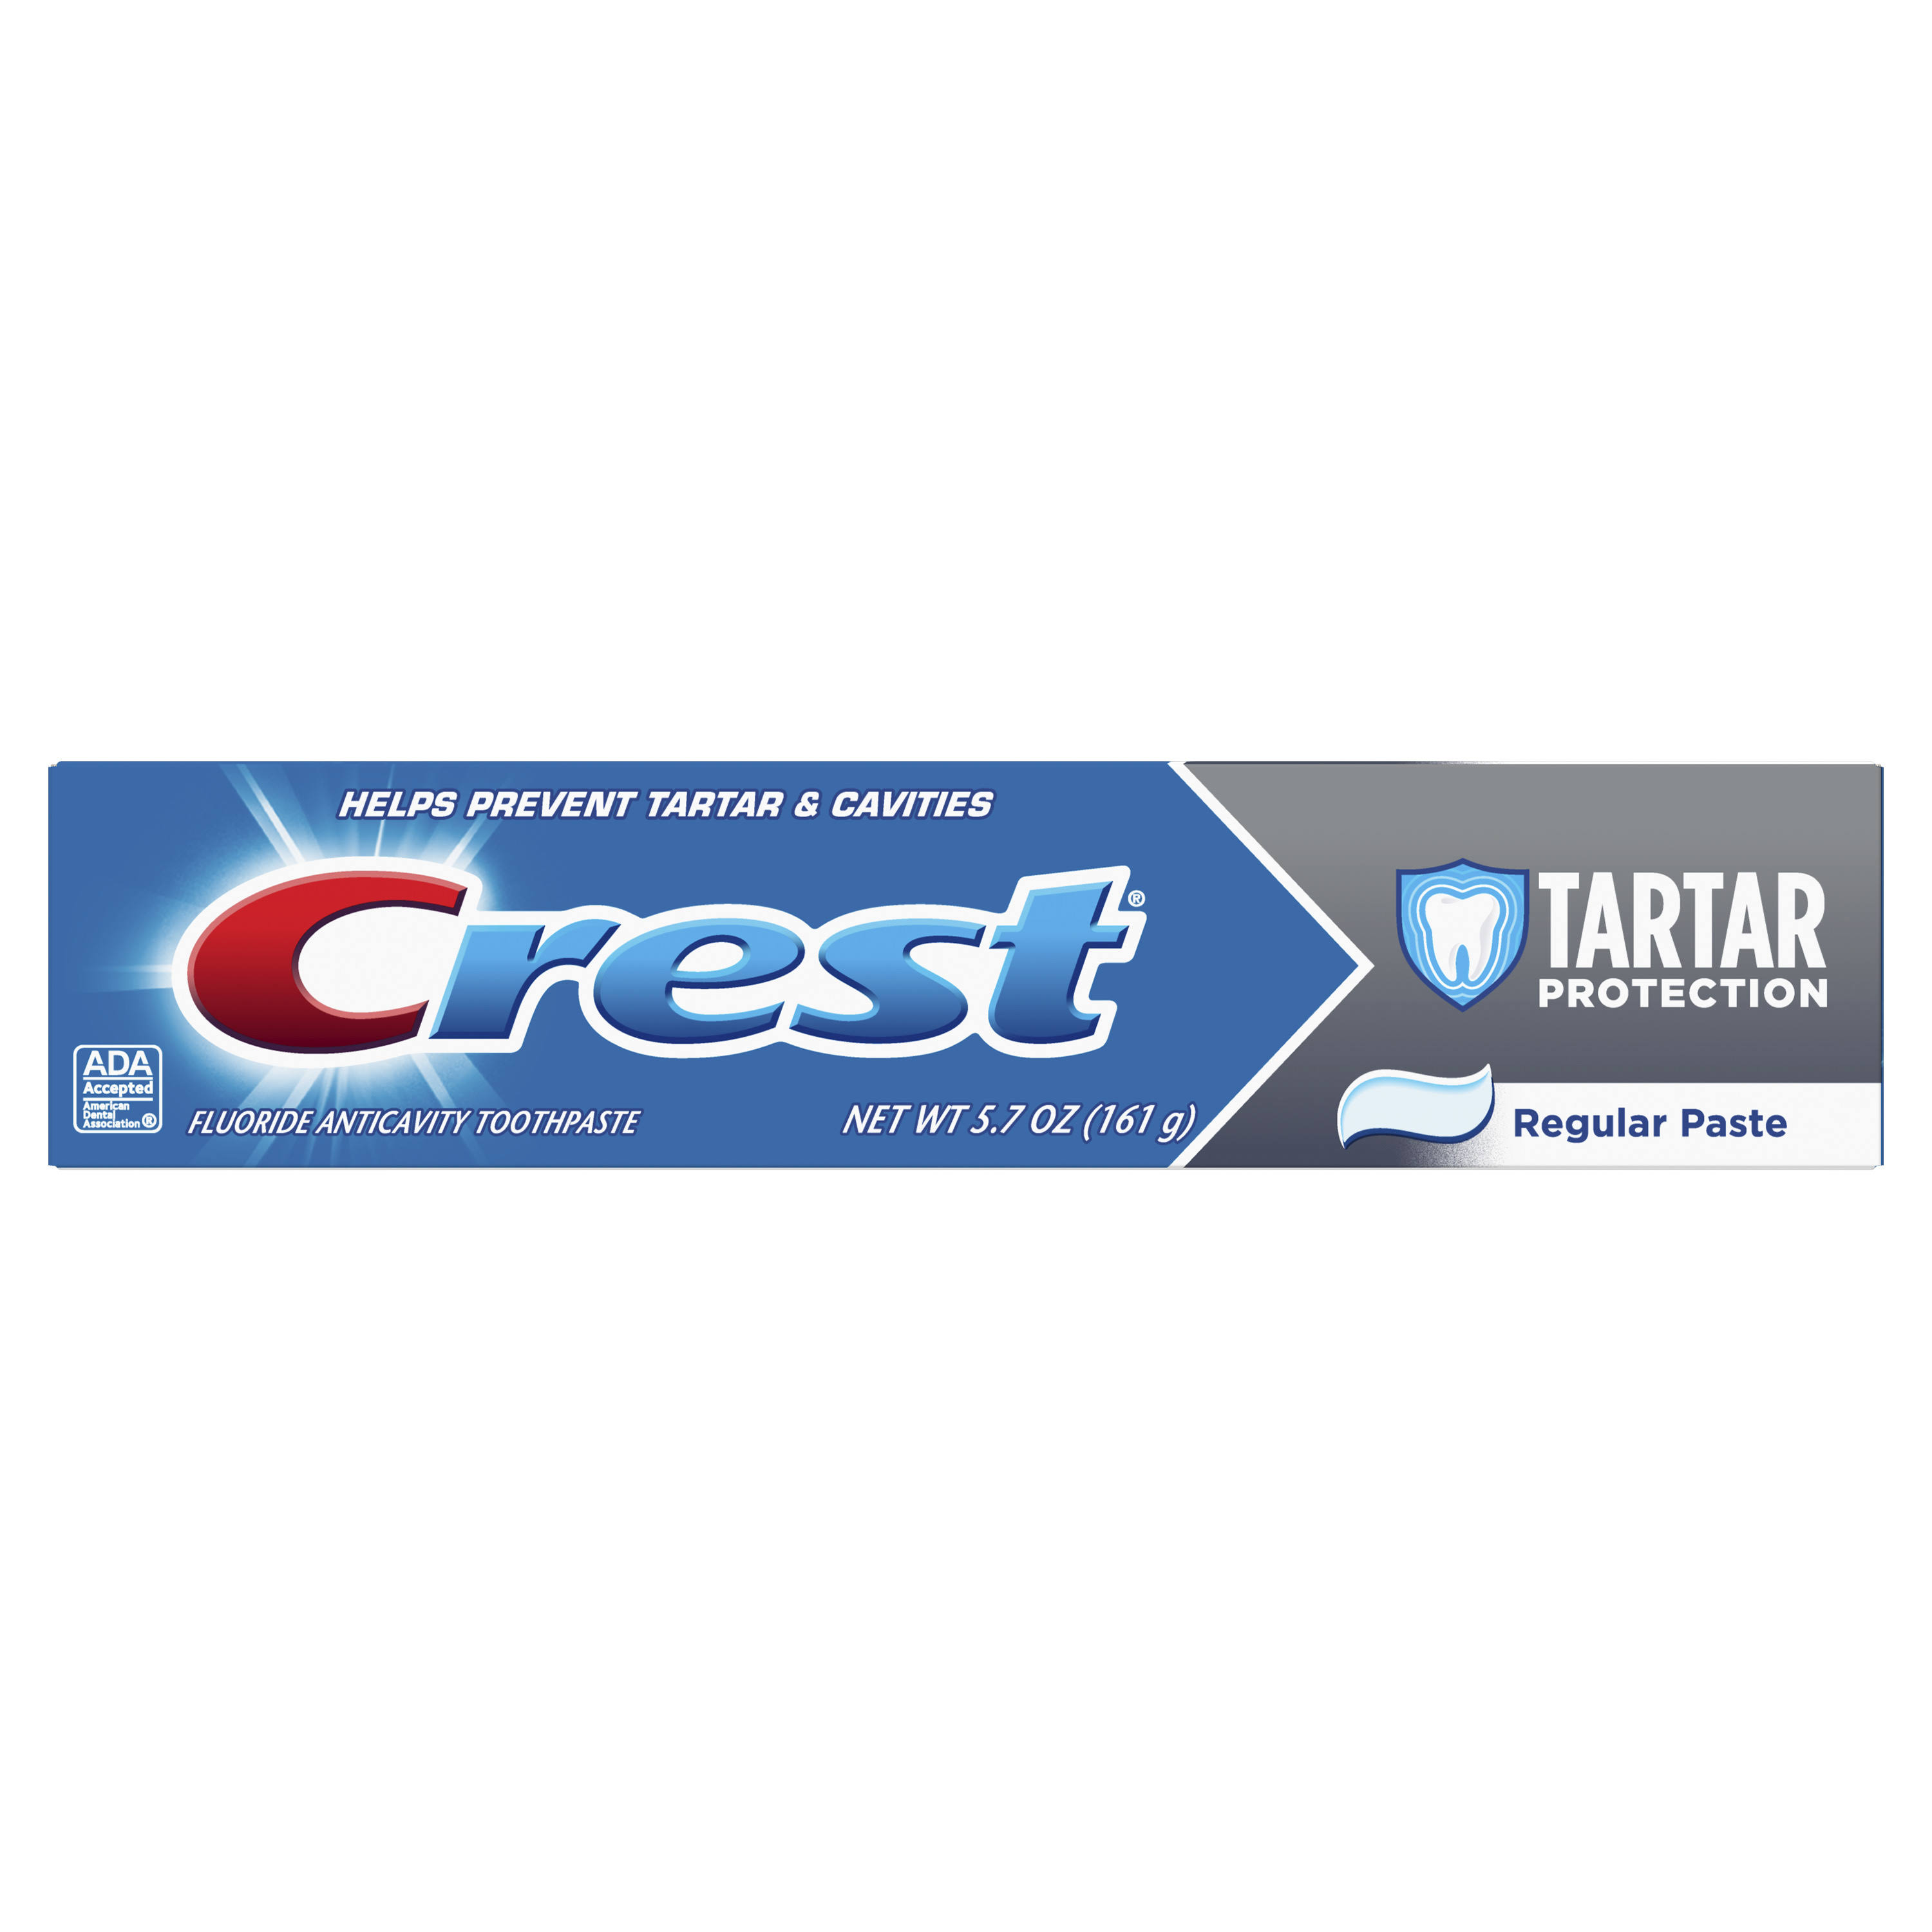 Crest Tartar Protection Toothpaste Regular 5.7 Oz